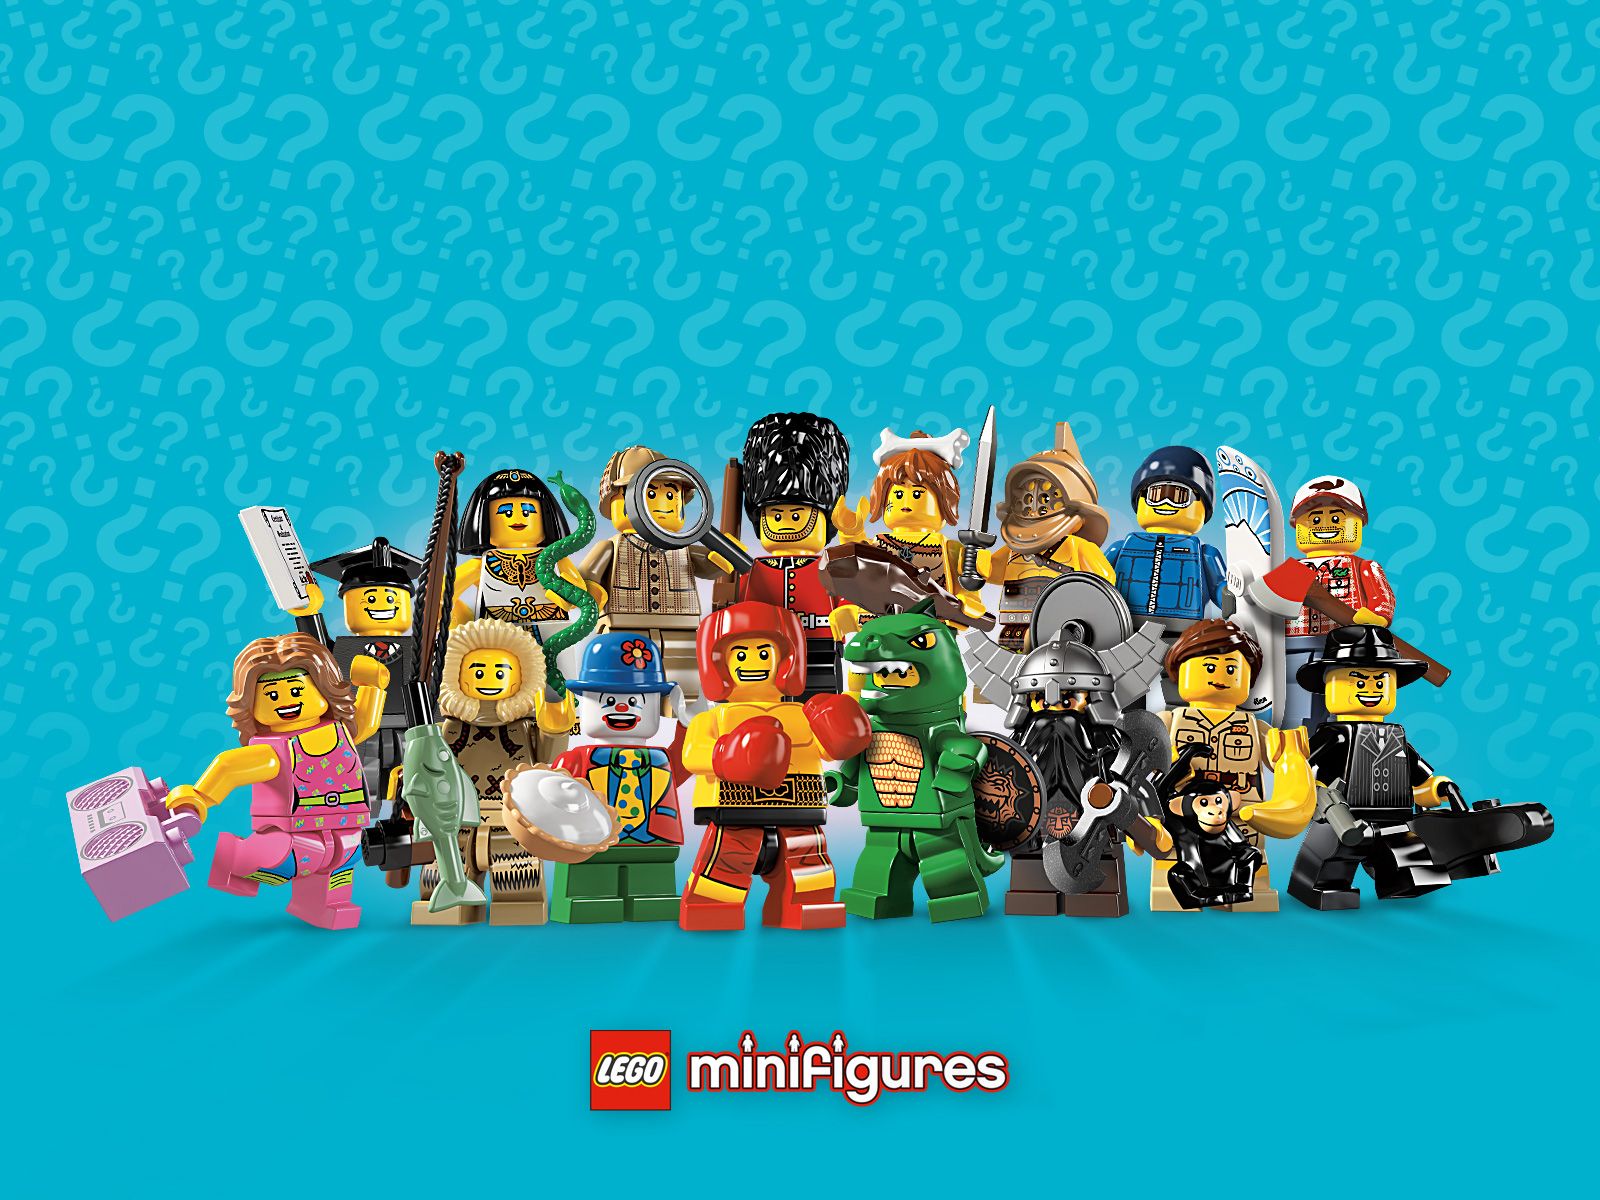 LEGO Minifigures Wallpaper